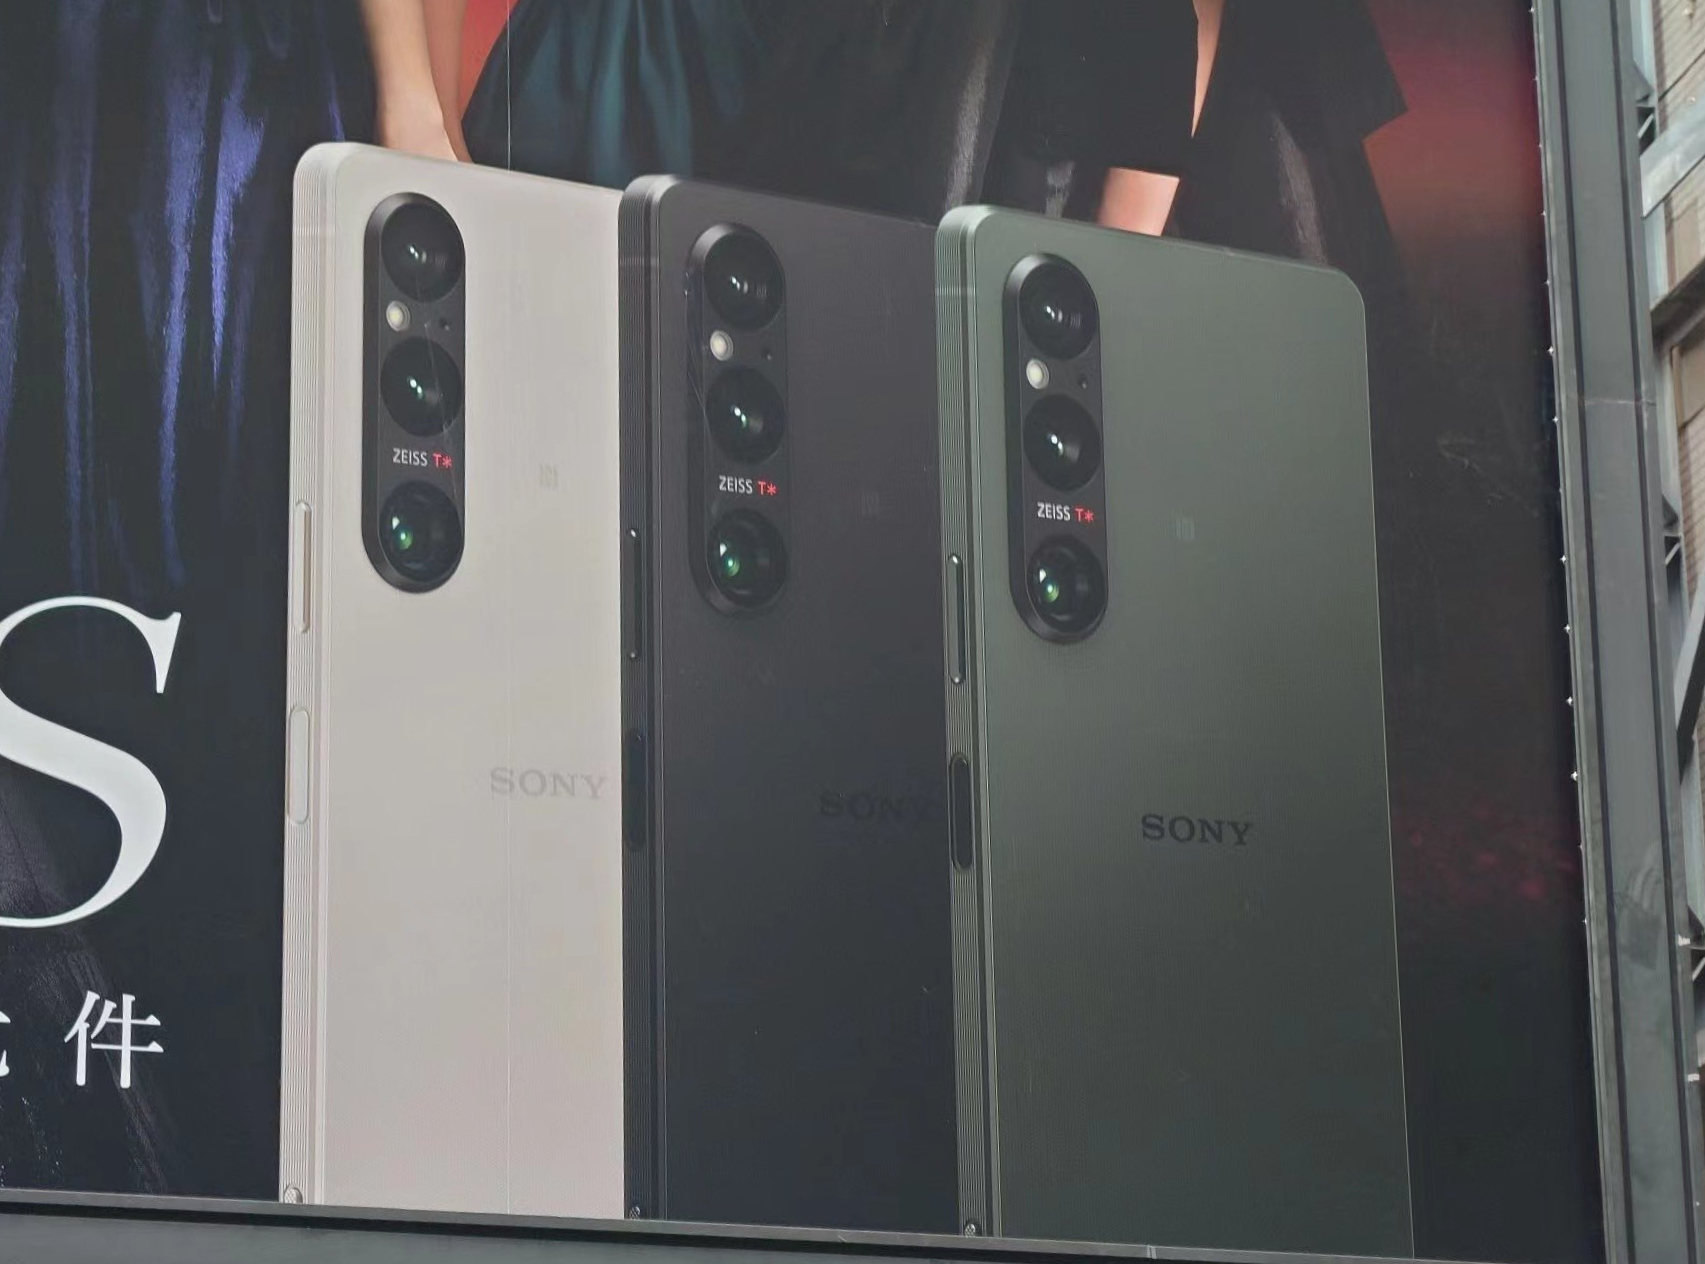 Цены на амбициозный флагман Sony Xperia 1 V стали известны за неделю до анонса